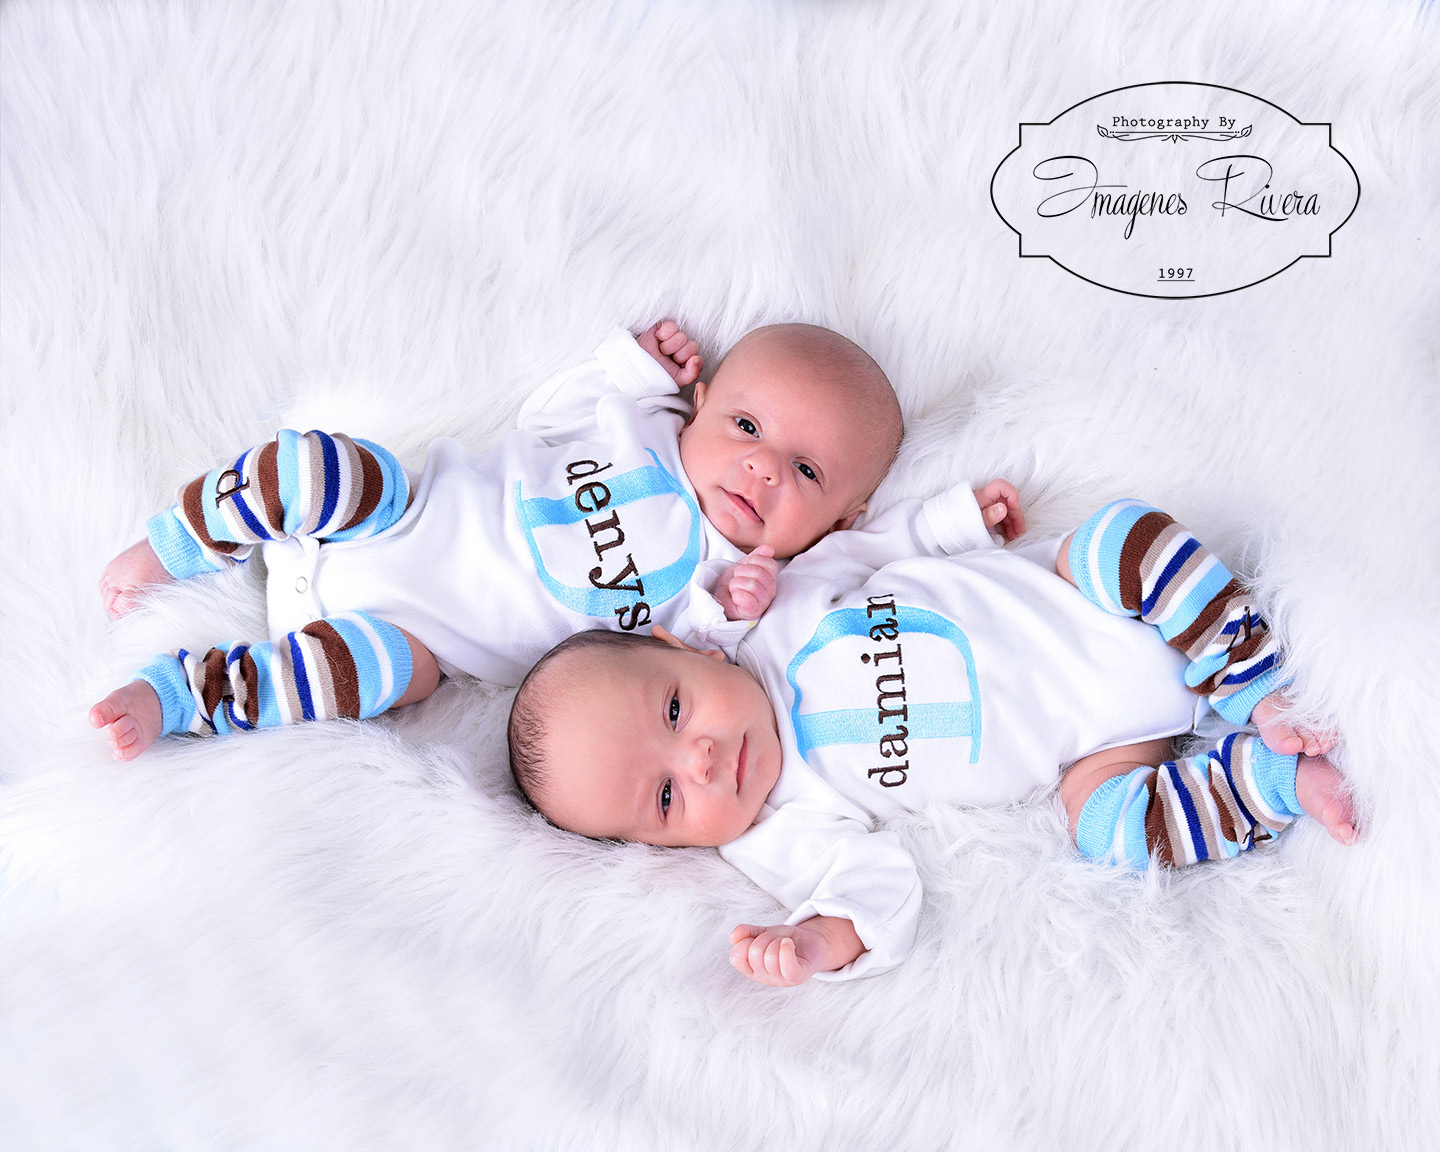 ♥ Denys & Damian twins newborn photography | Imagenes Rivera ♥